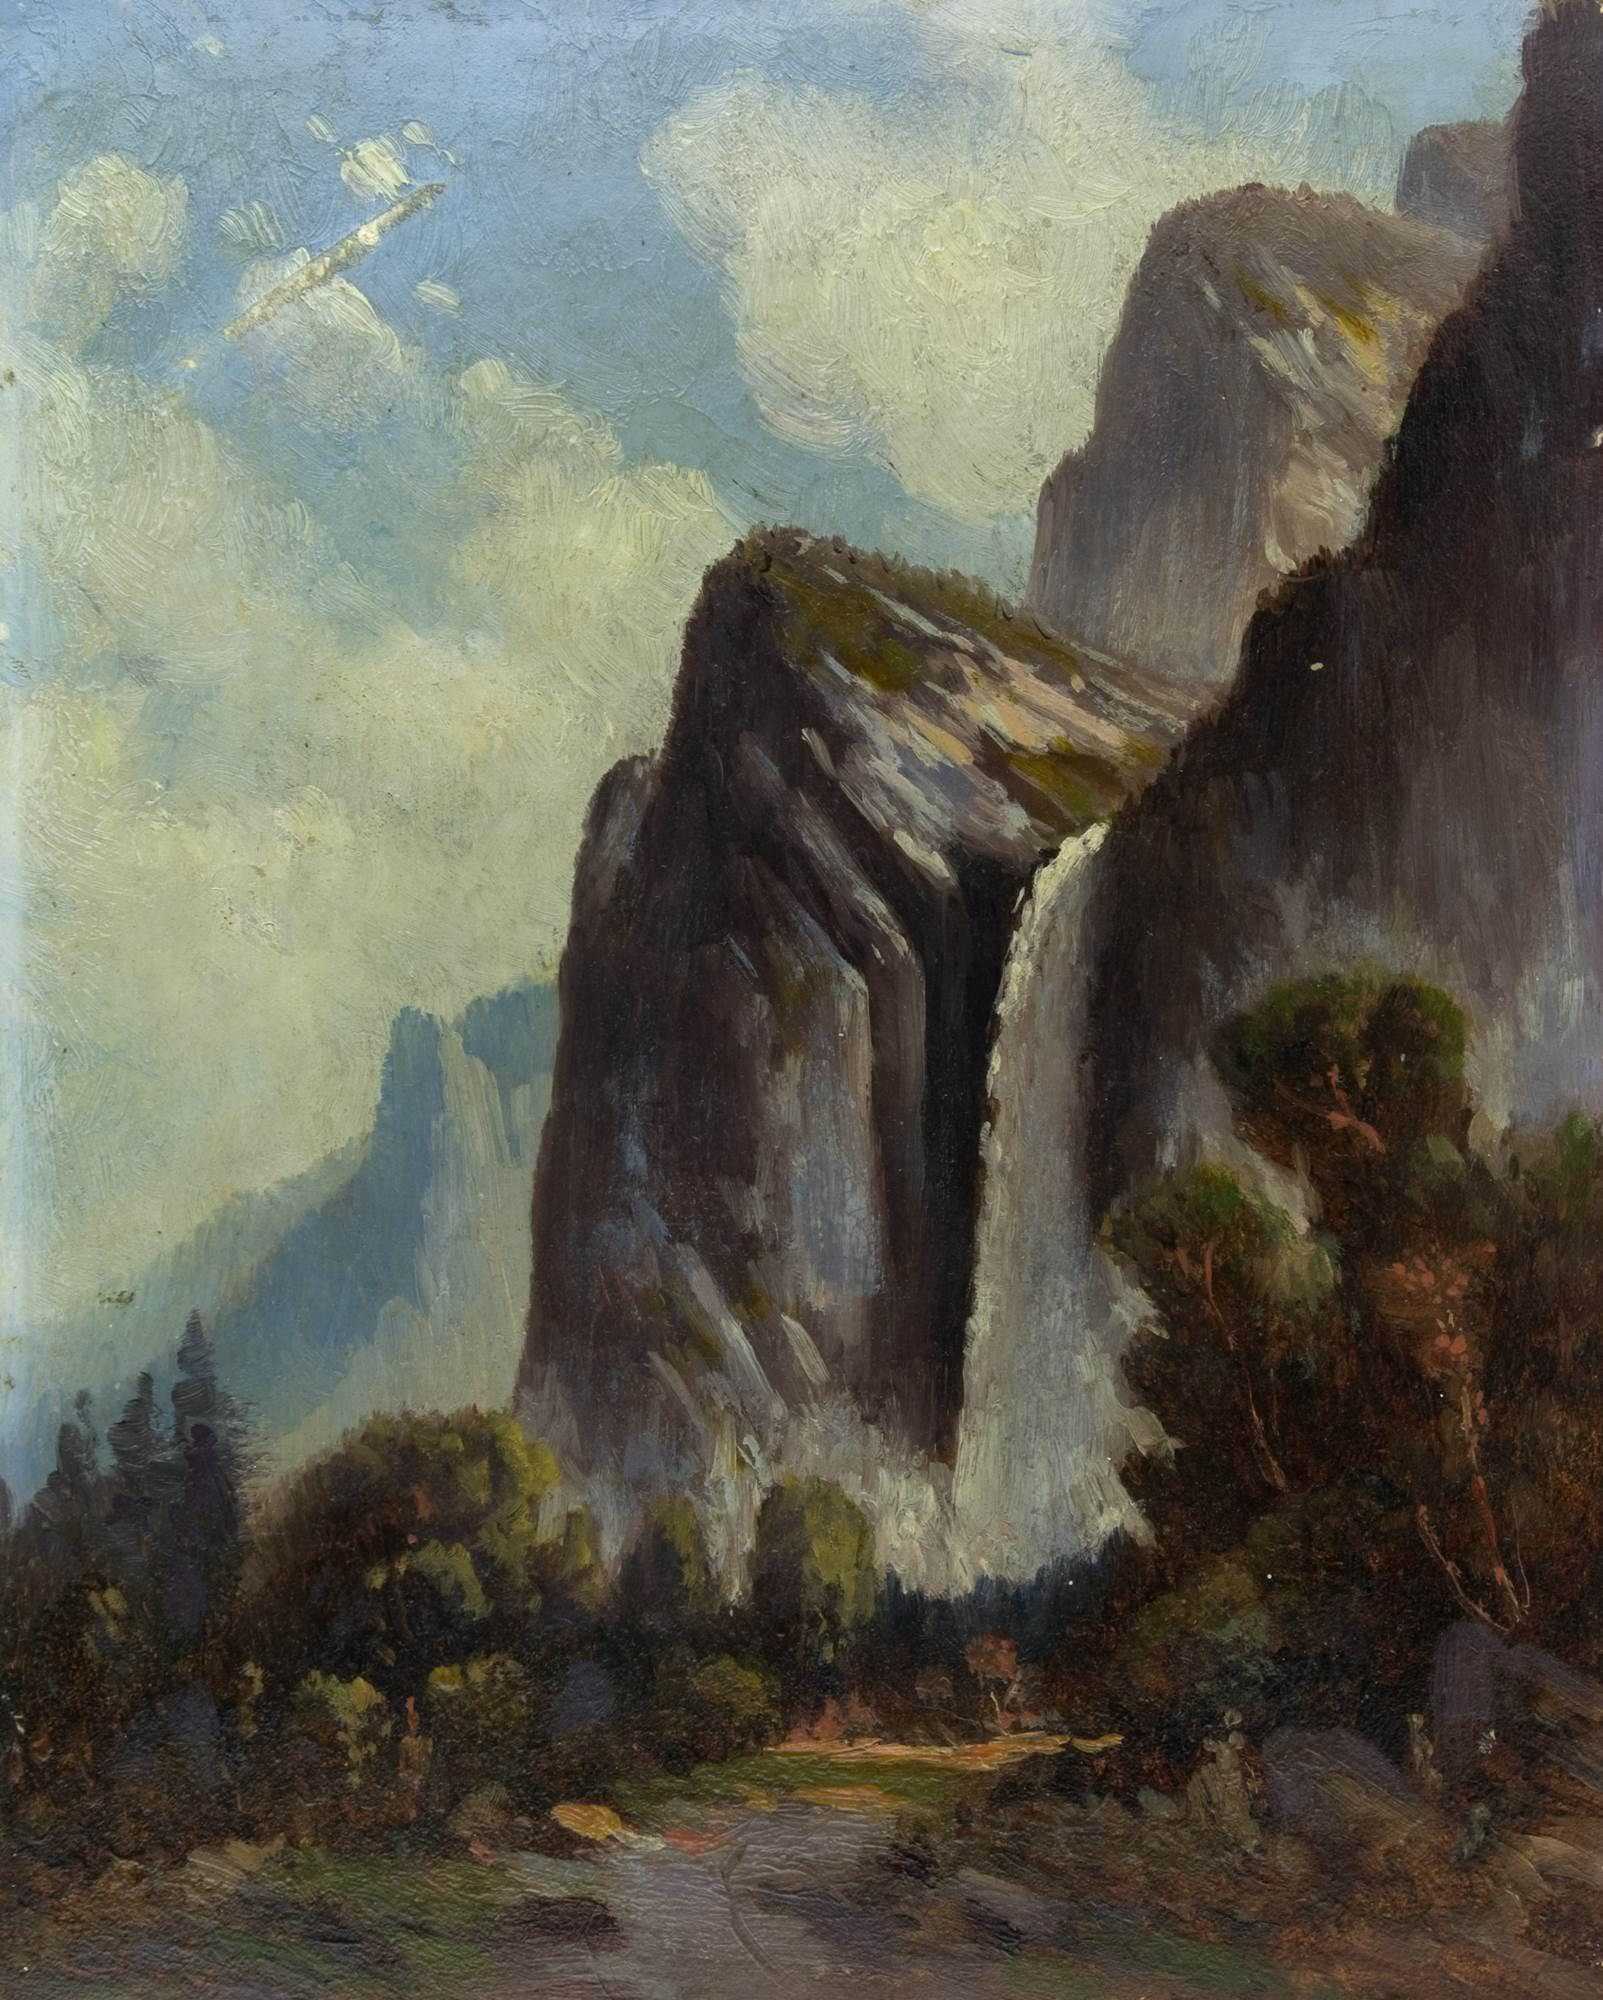 Painting Bridalveil Falls